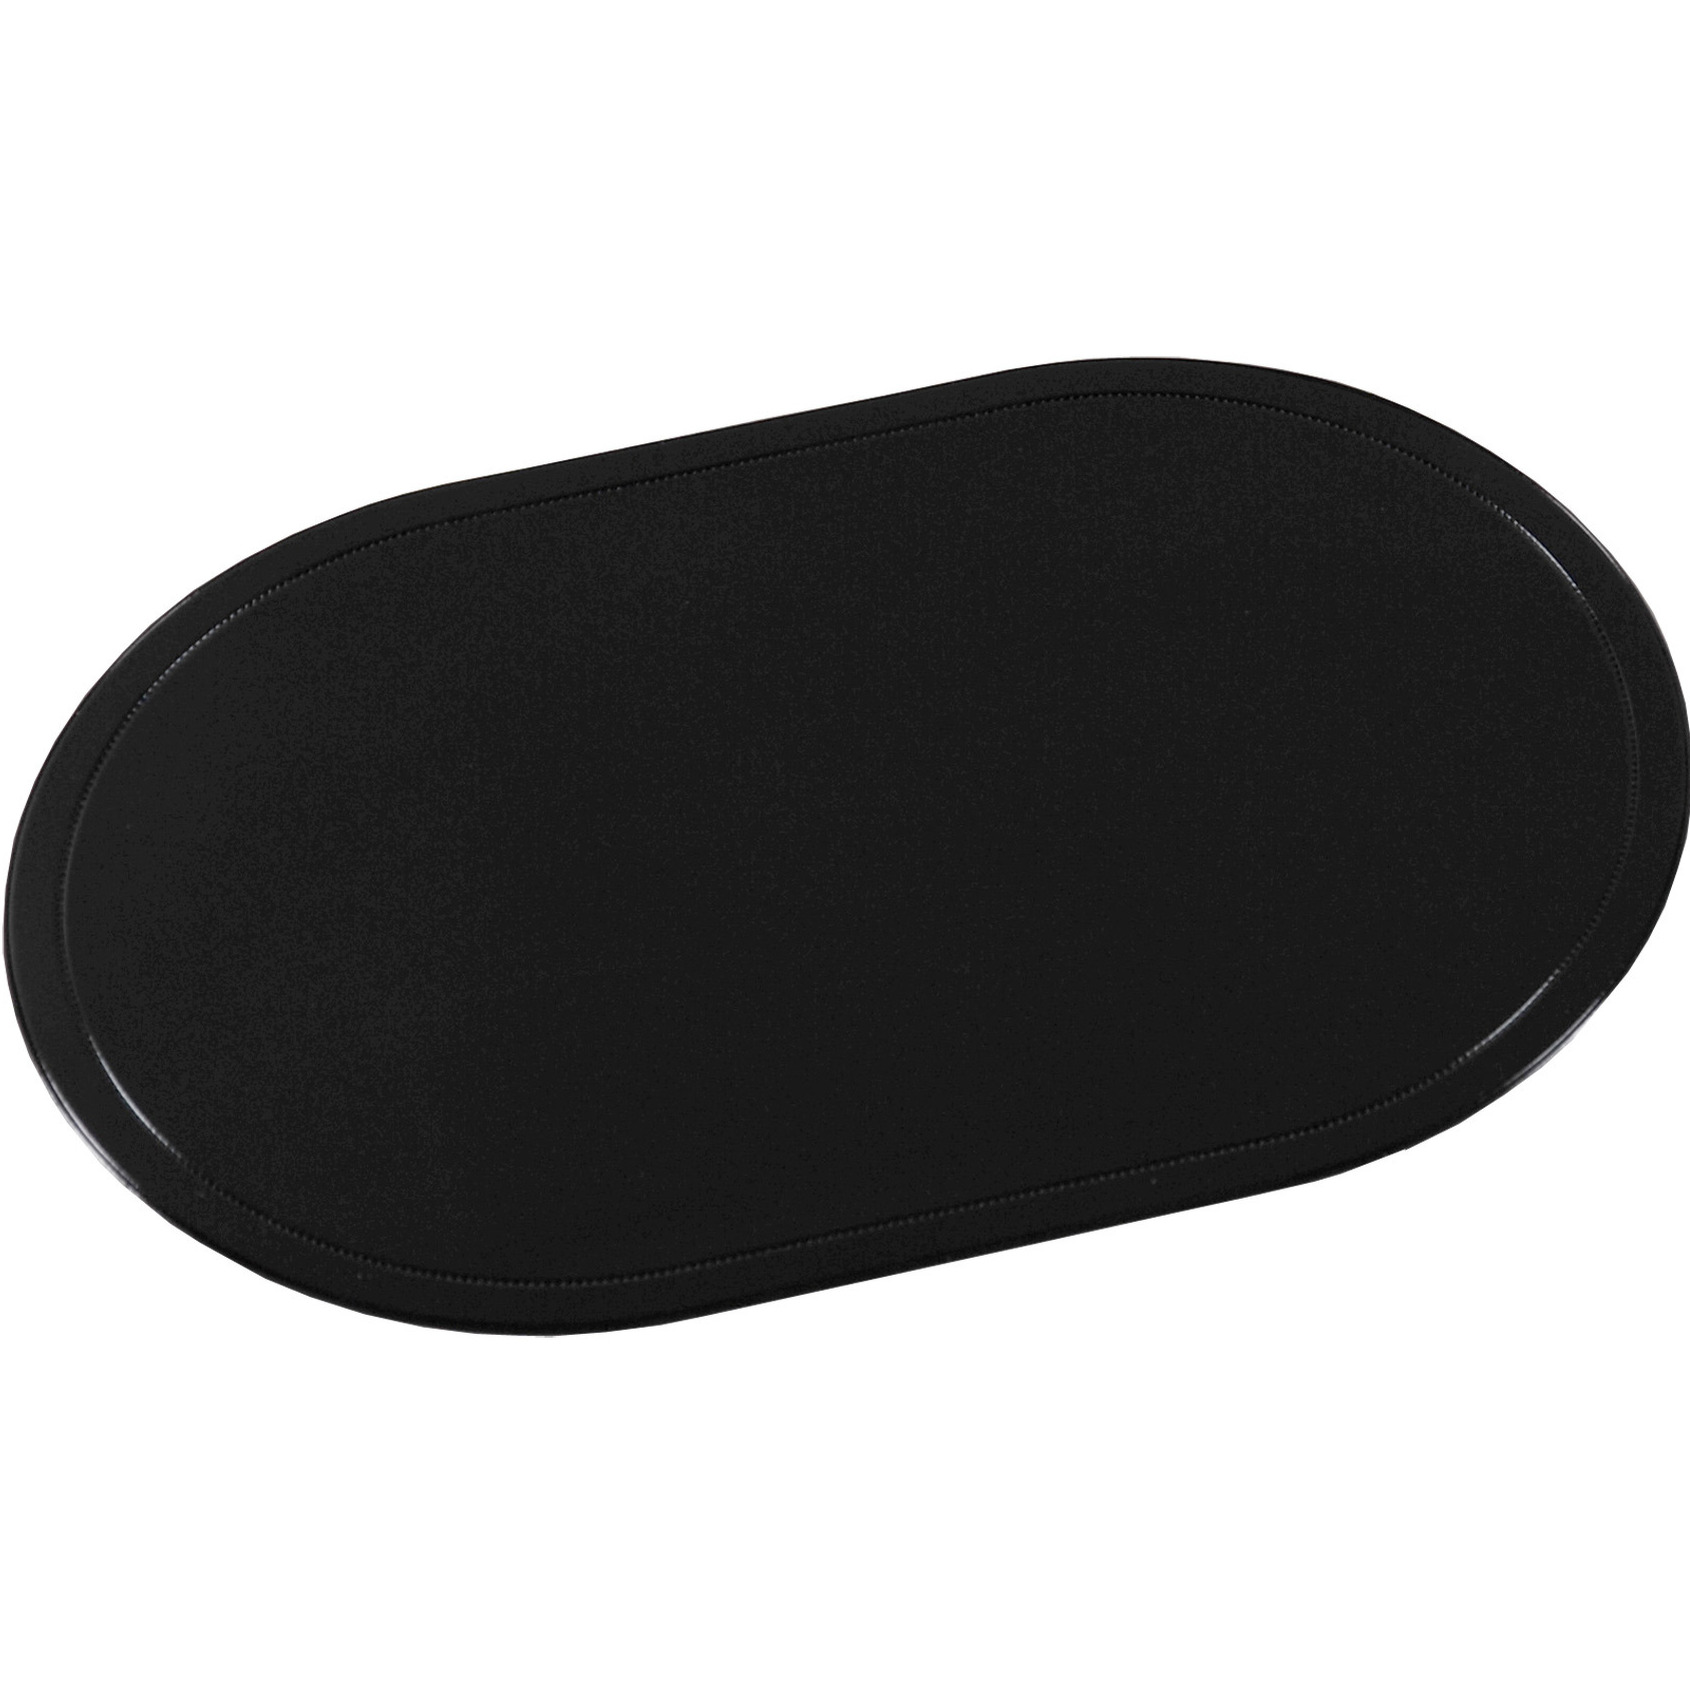 Merkloos 1x Ovale placemats zwart 28 x cm -